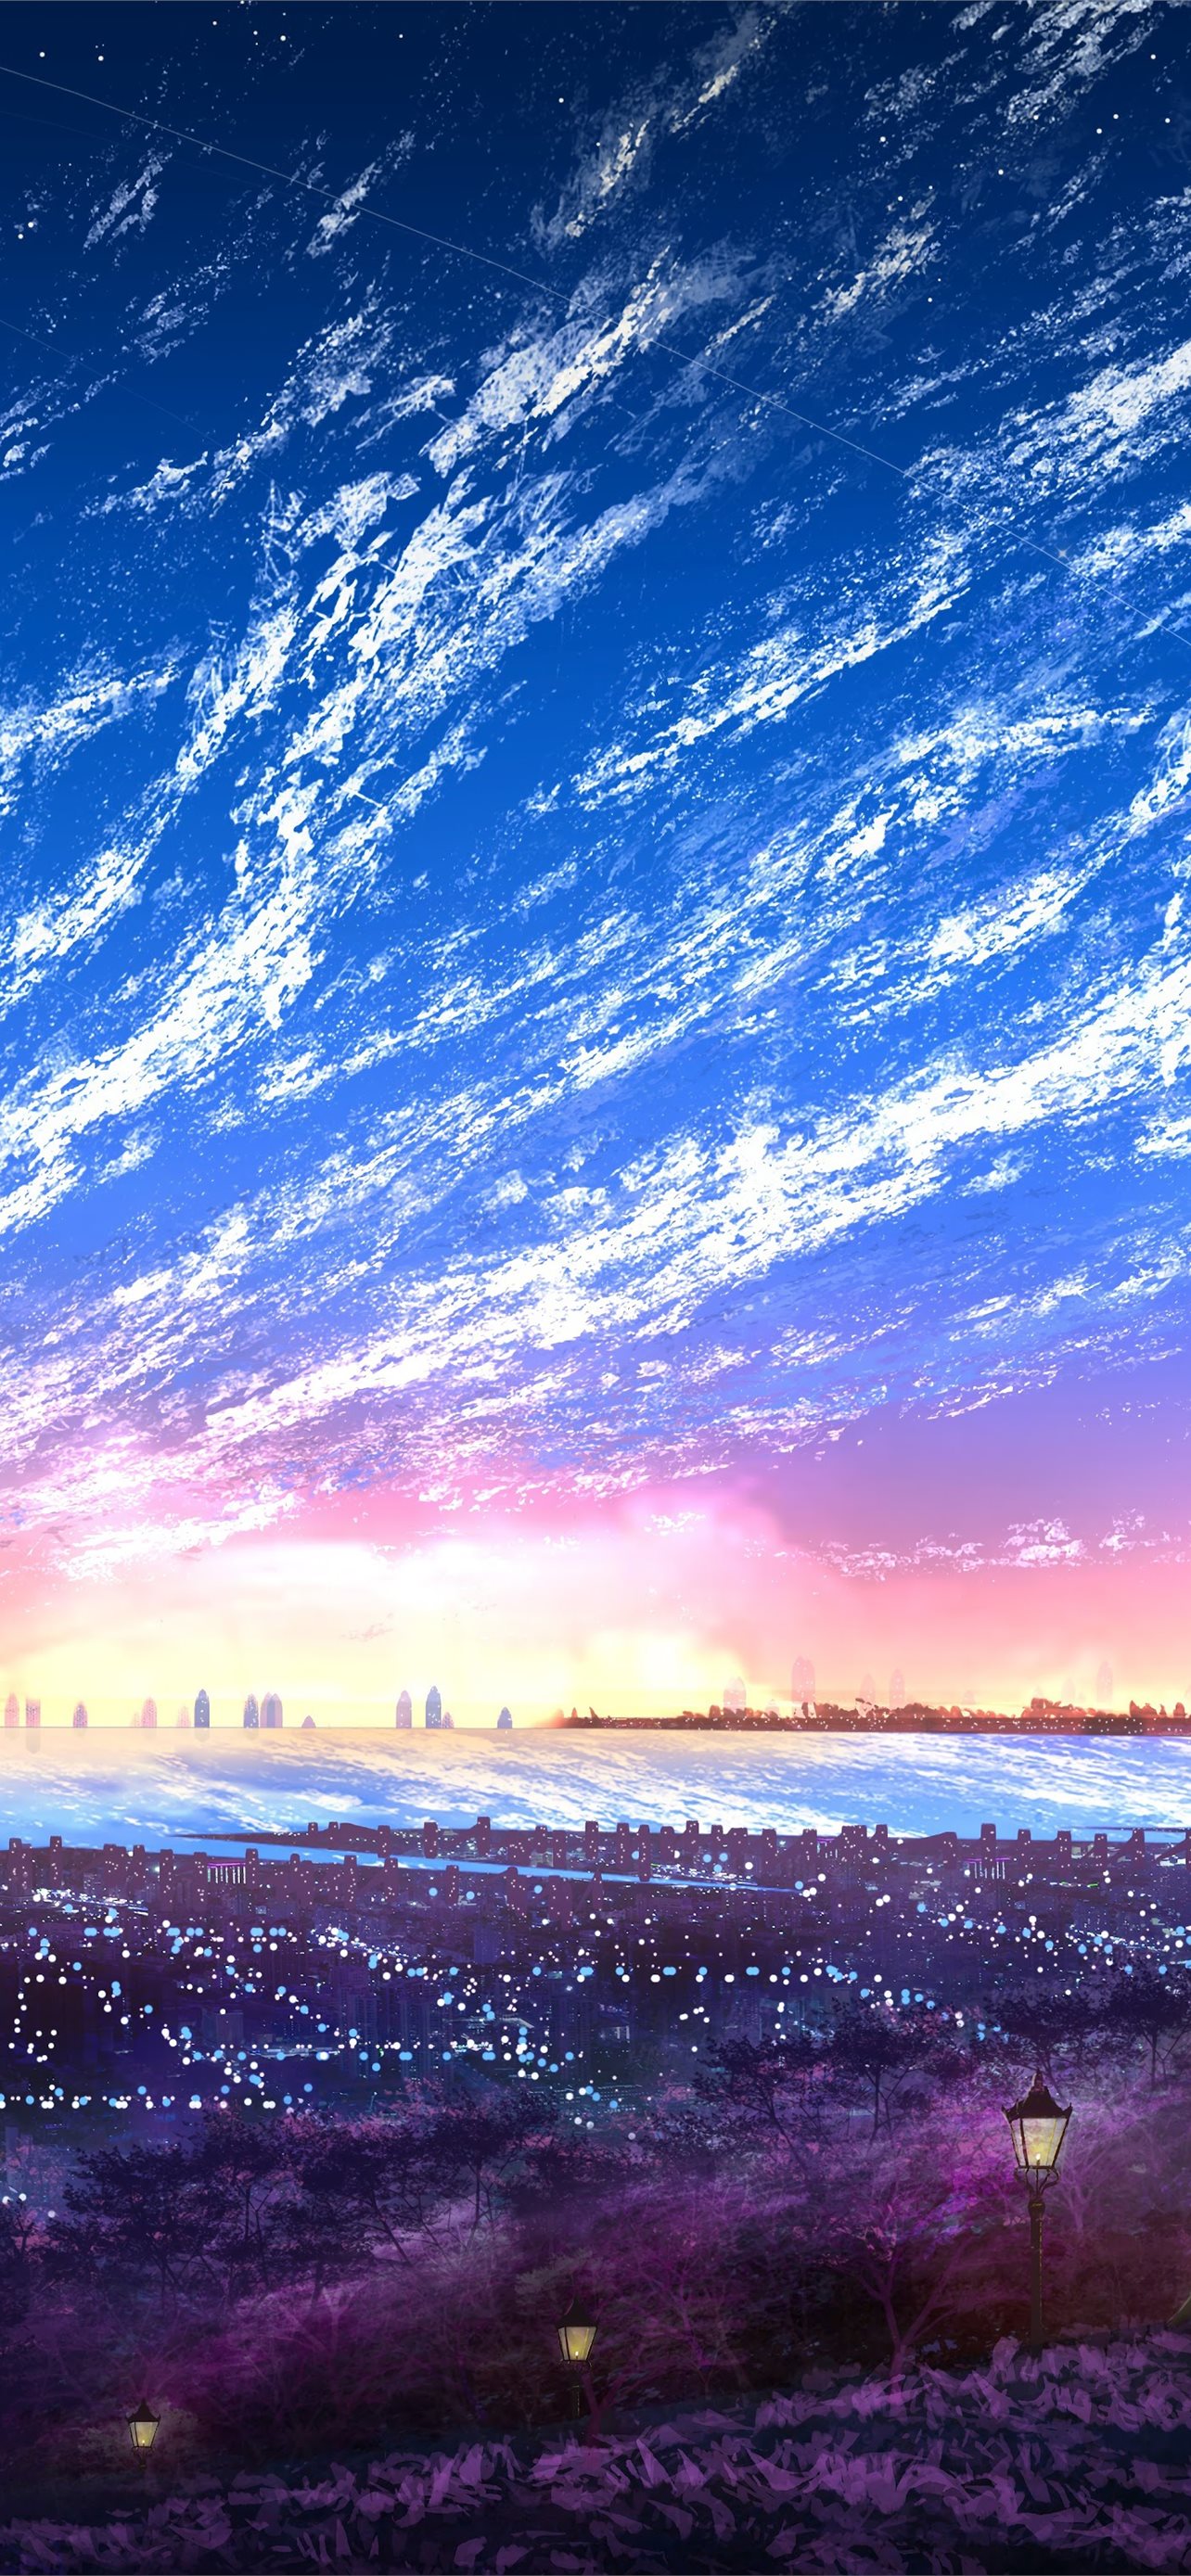 Scenery Anime Gambarku Iphone Wallpapers Free Download